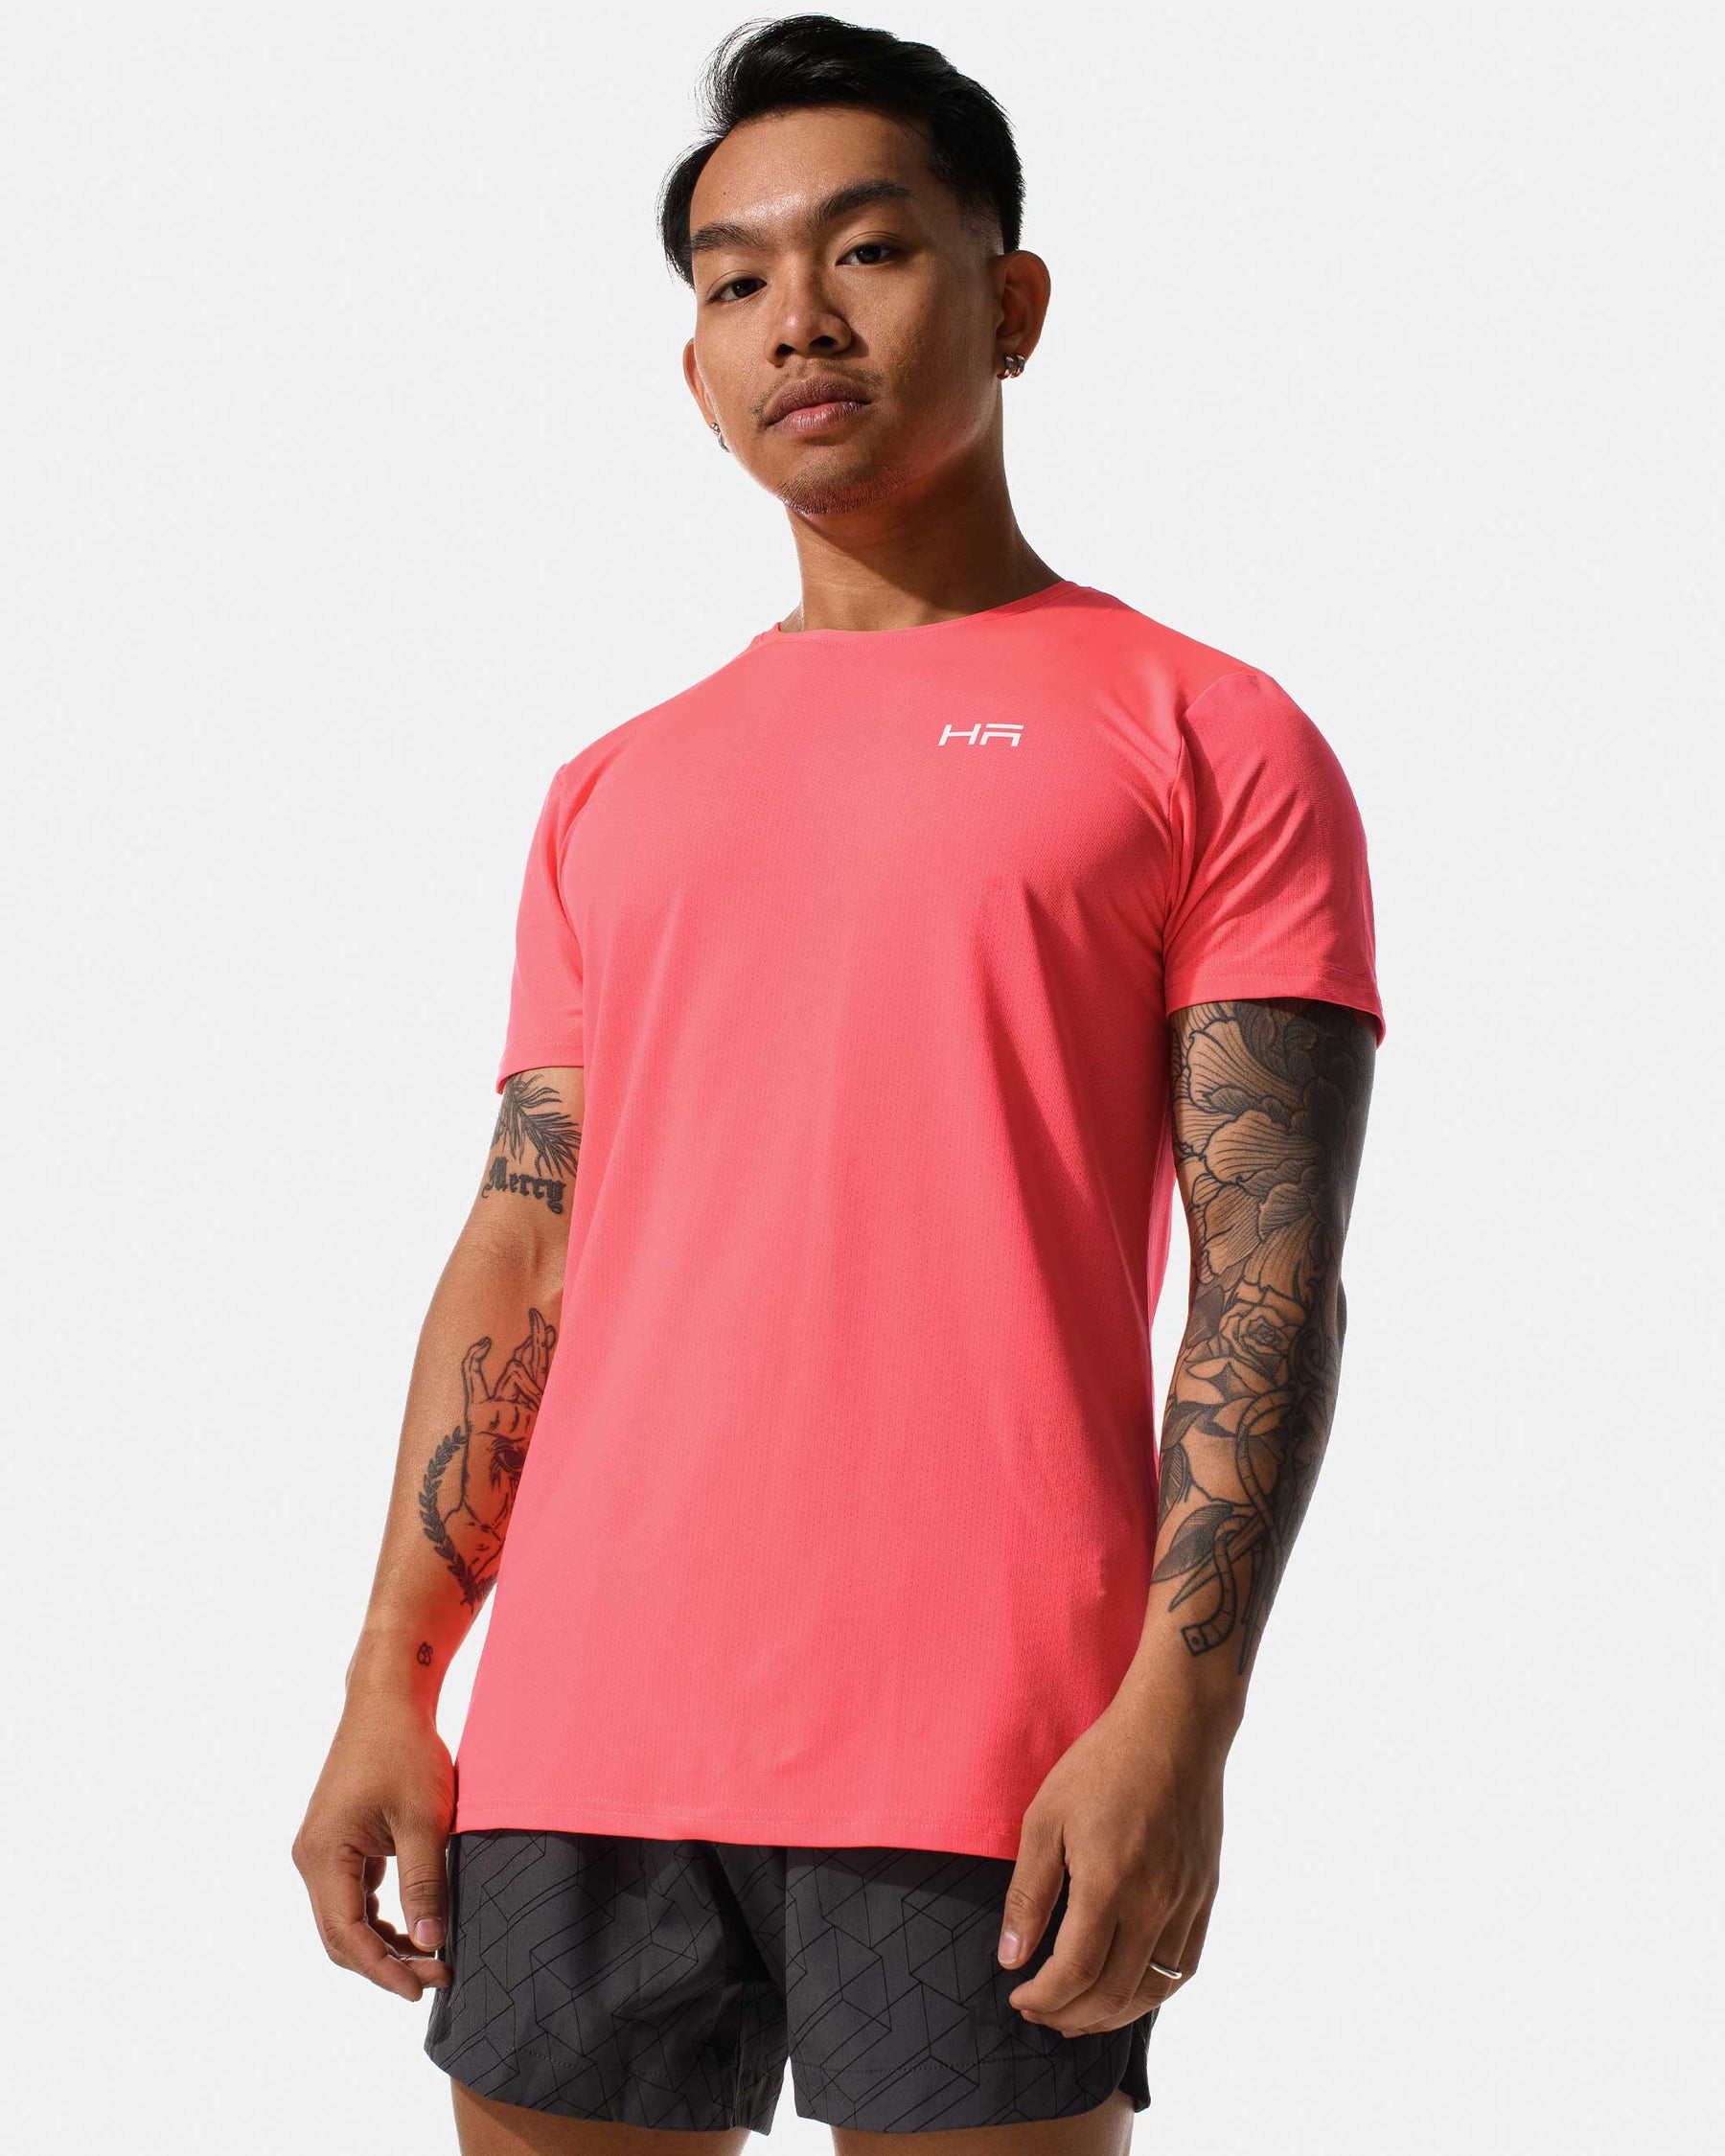 T-shirt sport club tee rose homme - Nike